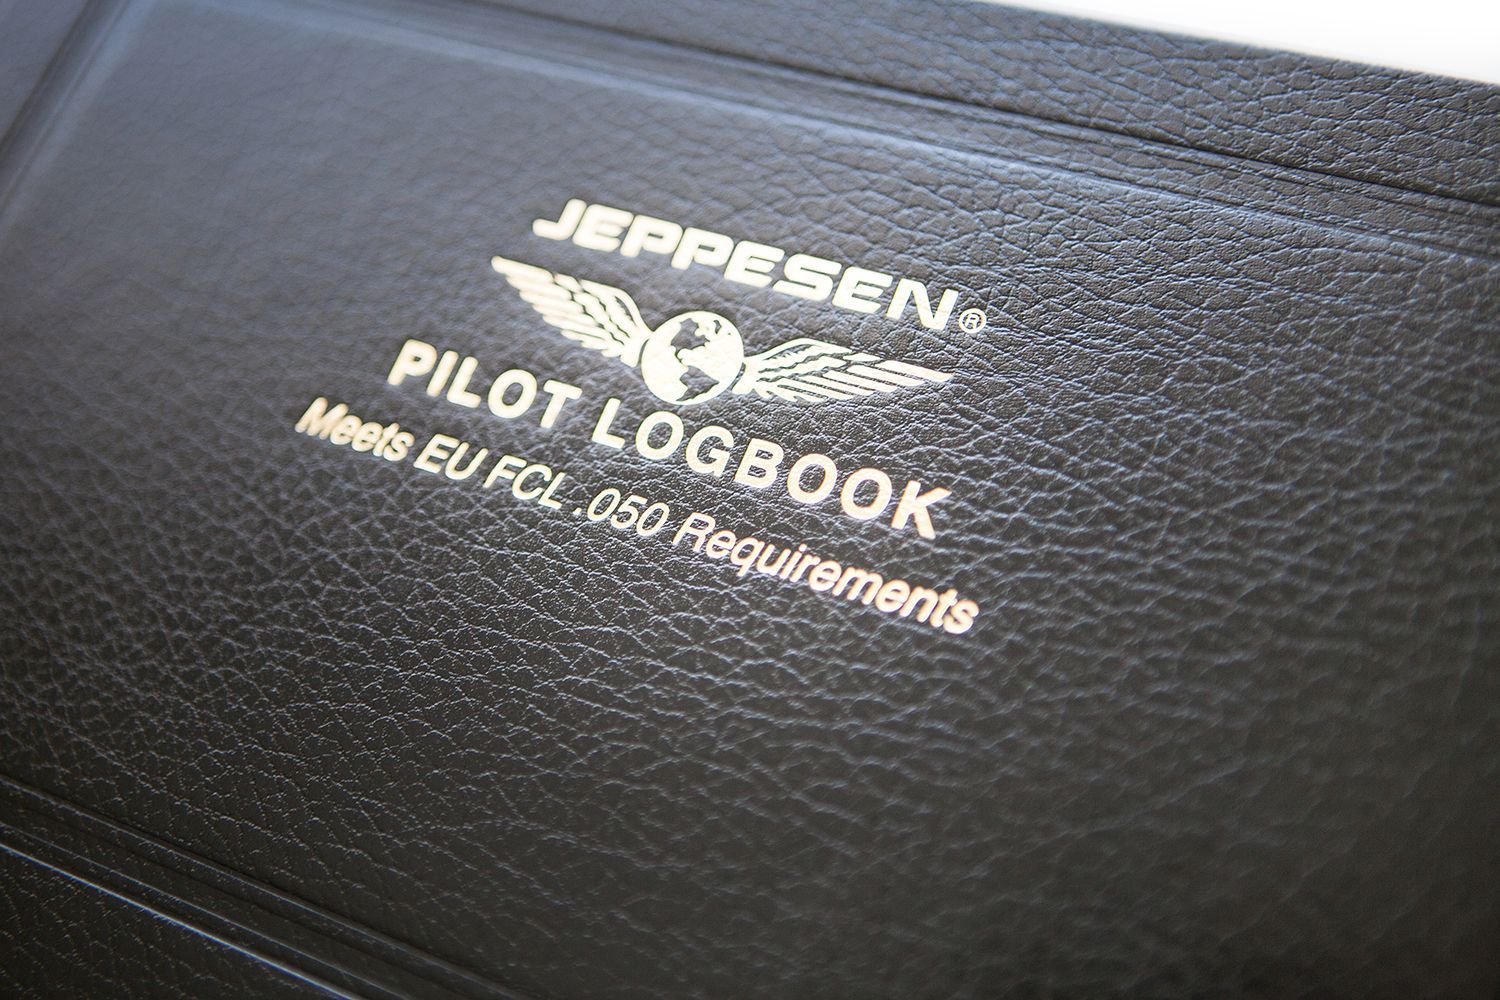 Jeppesen - Flugbuch "Professional European Pilot"